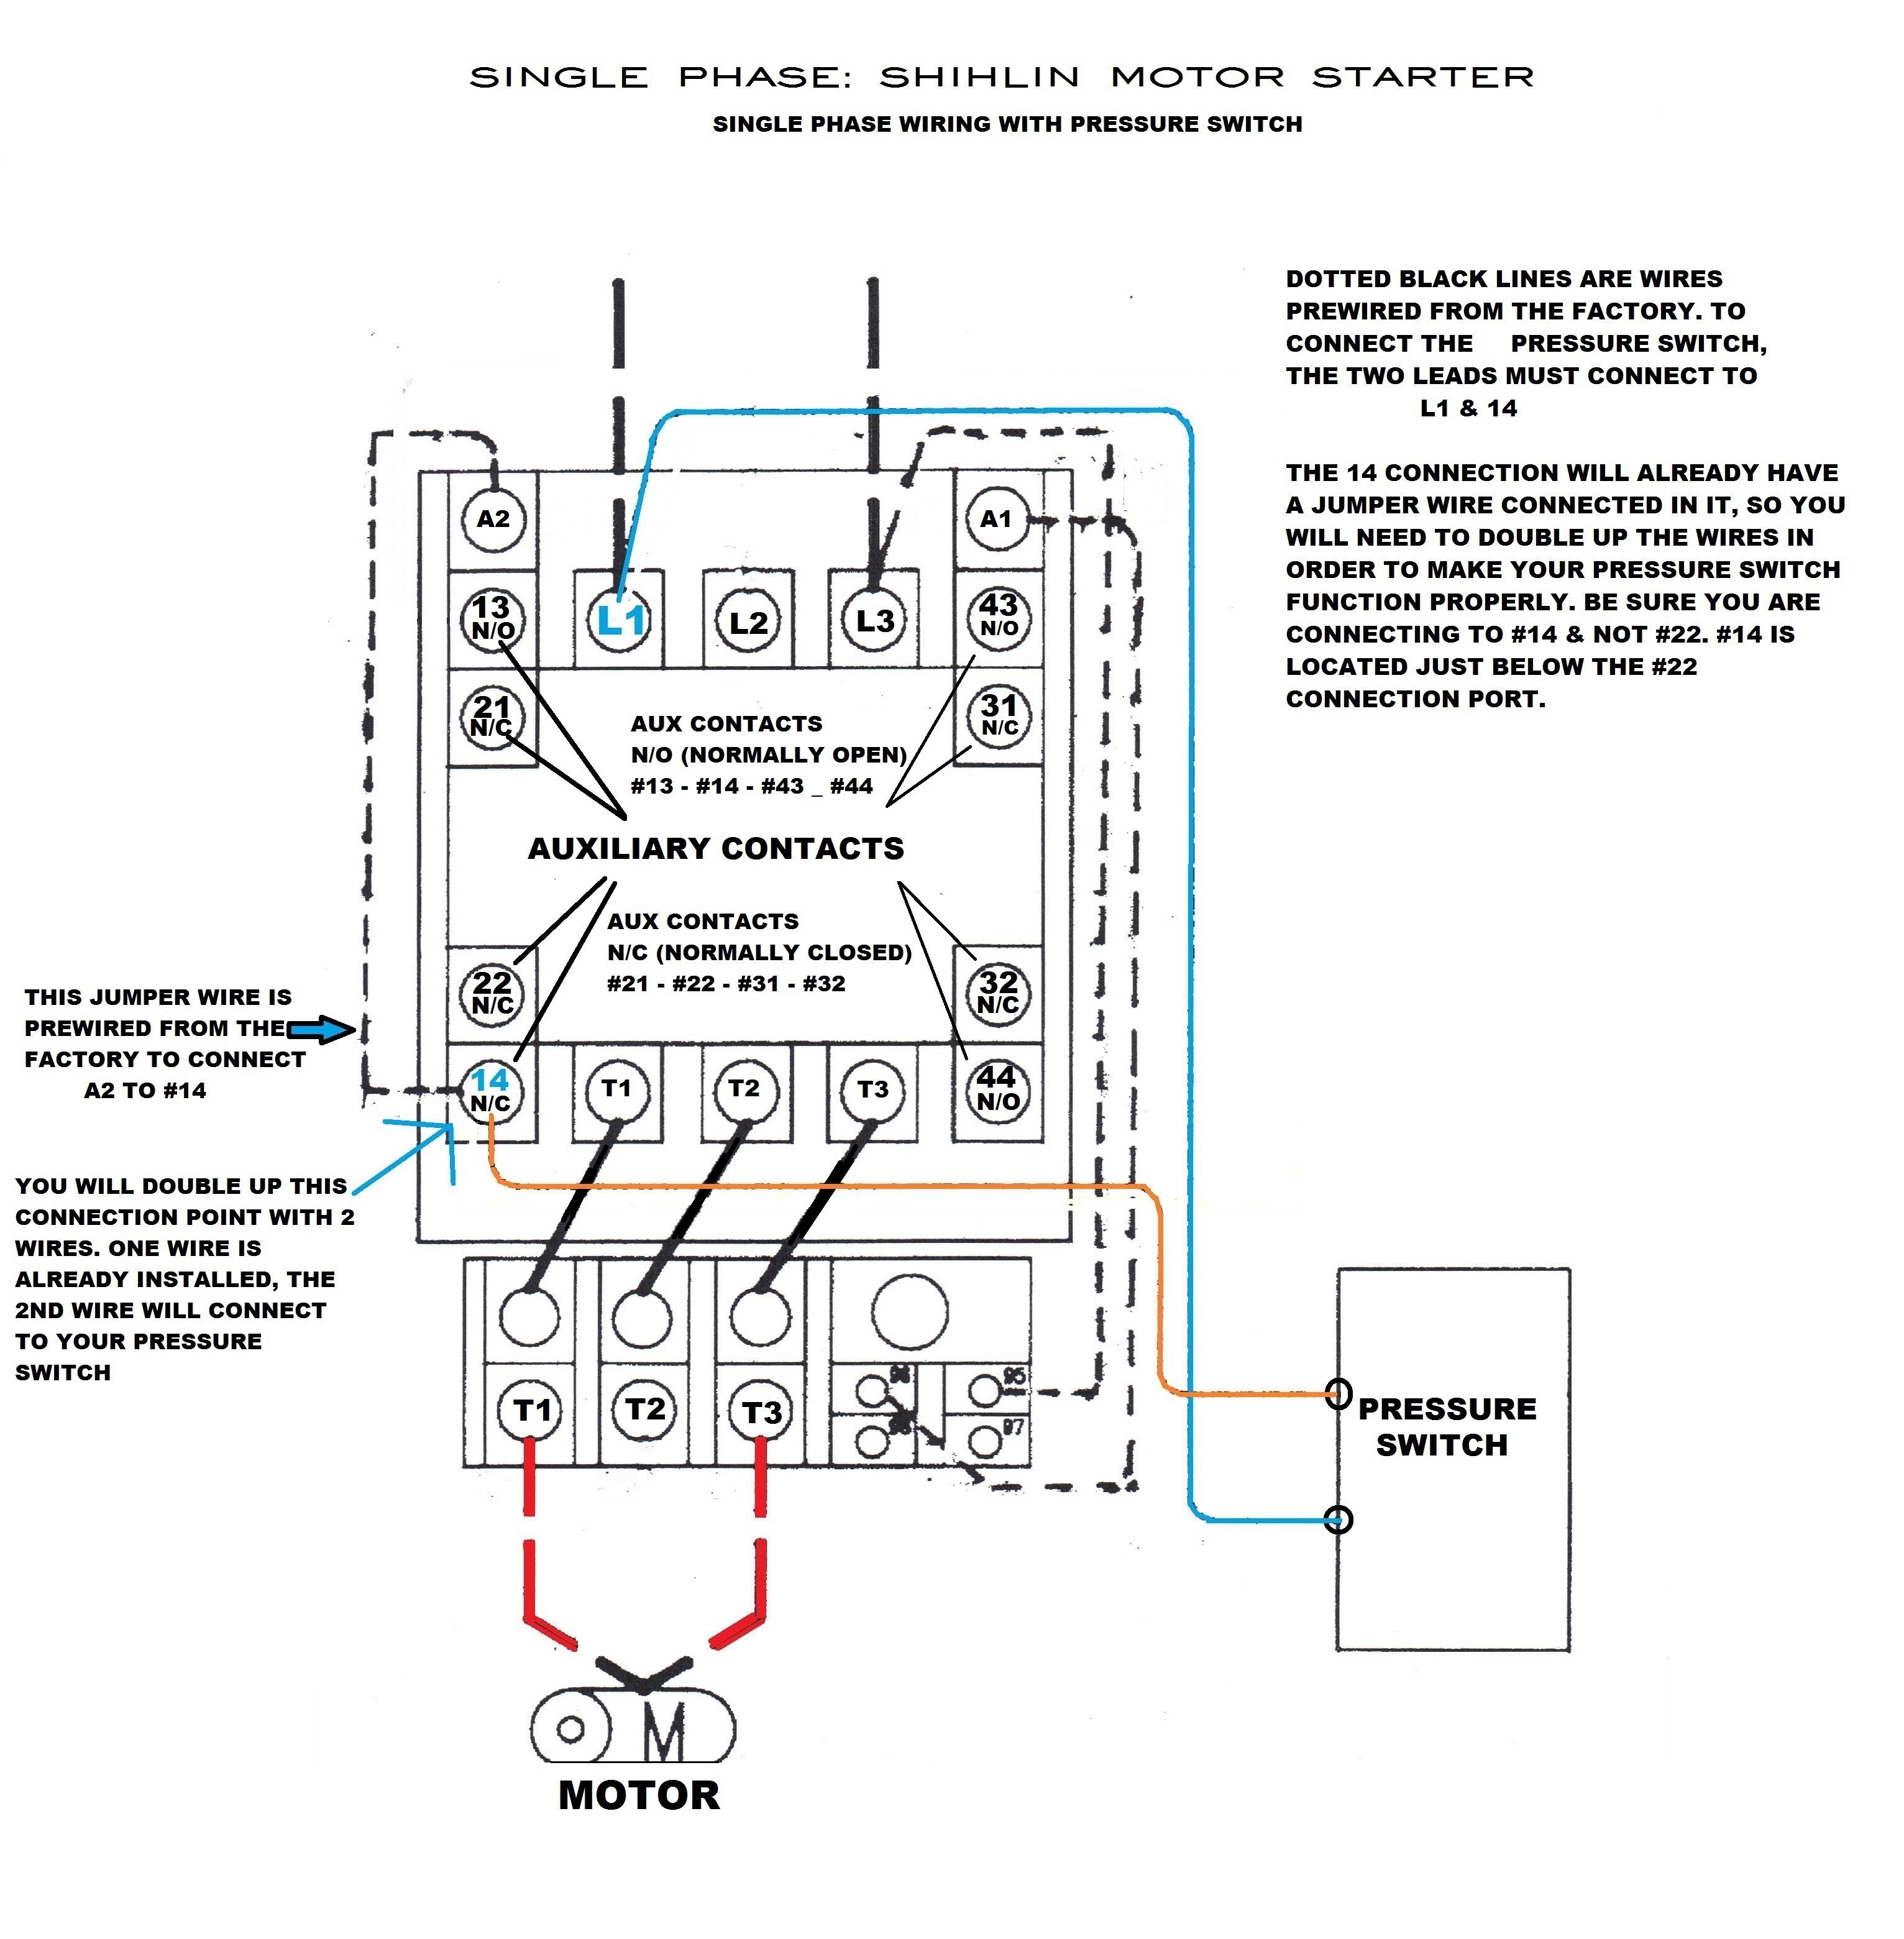 Electric Motor Wiring Diagram Single Phase Used Single Phase Wire Diagram • Electrical Outlet Symbol 2018 Of Electric Motor Wiring Diagram Single Phase